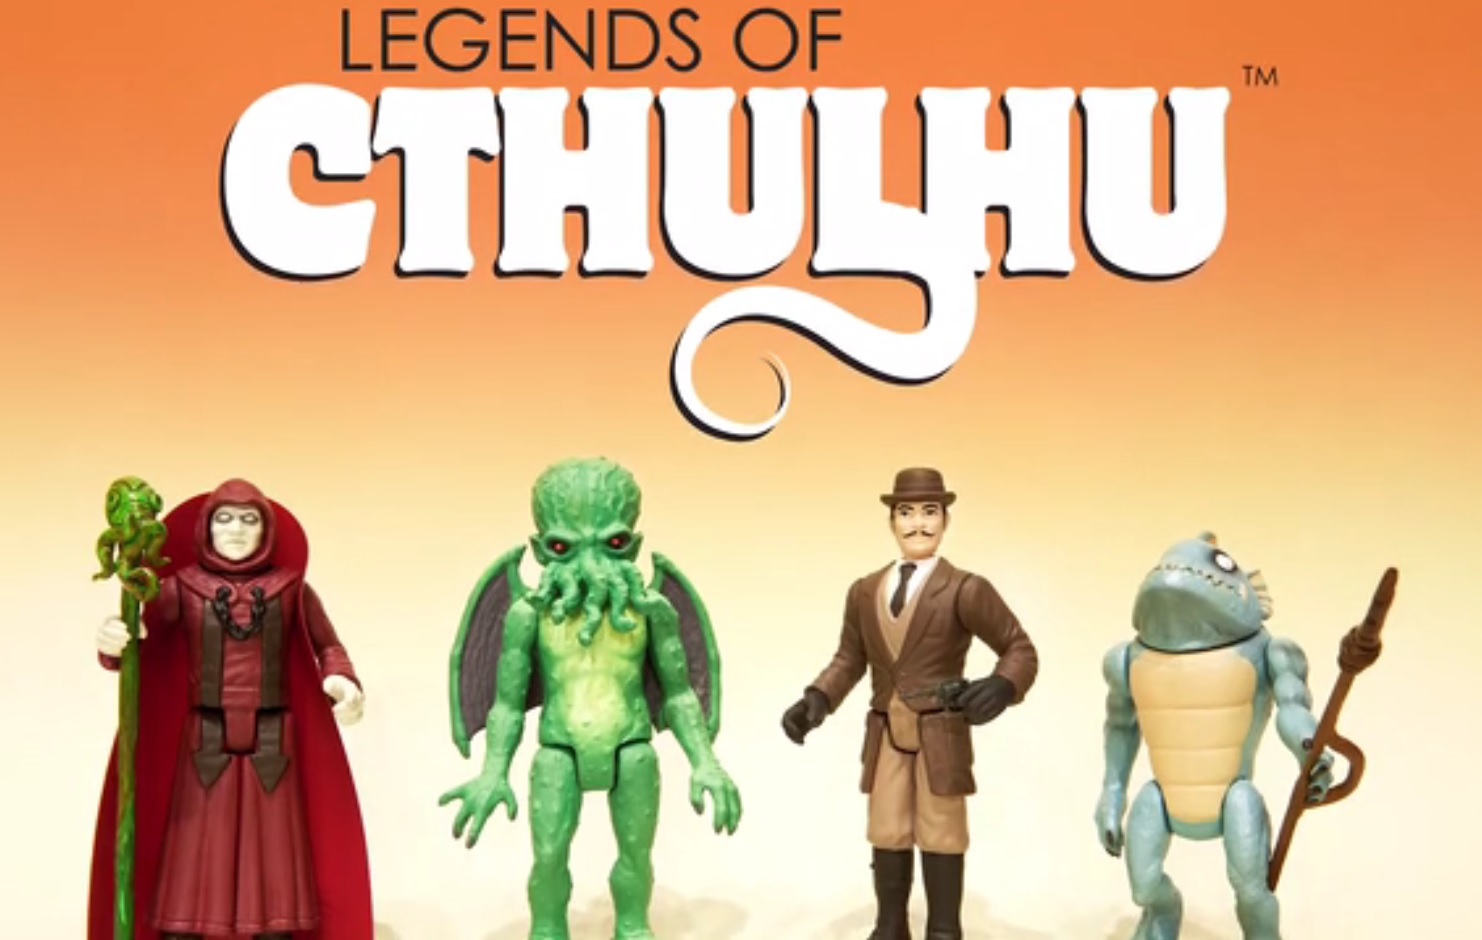 Legends of Cthulhu